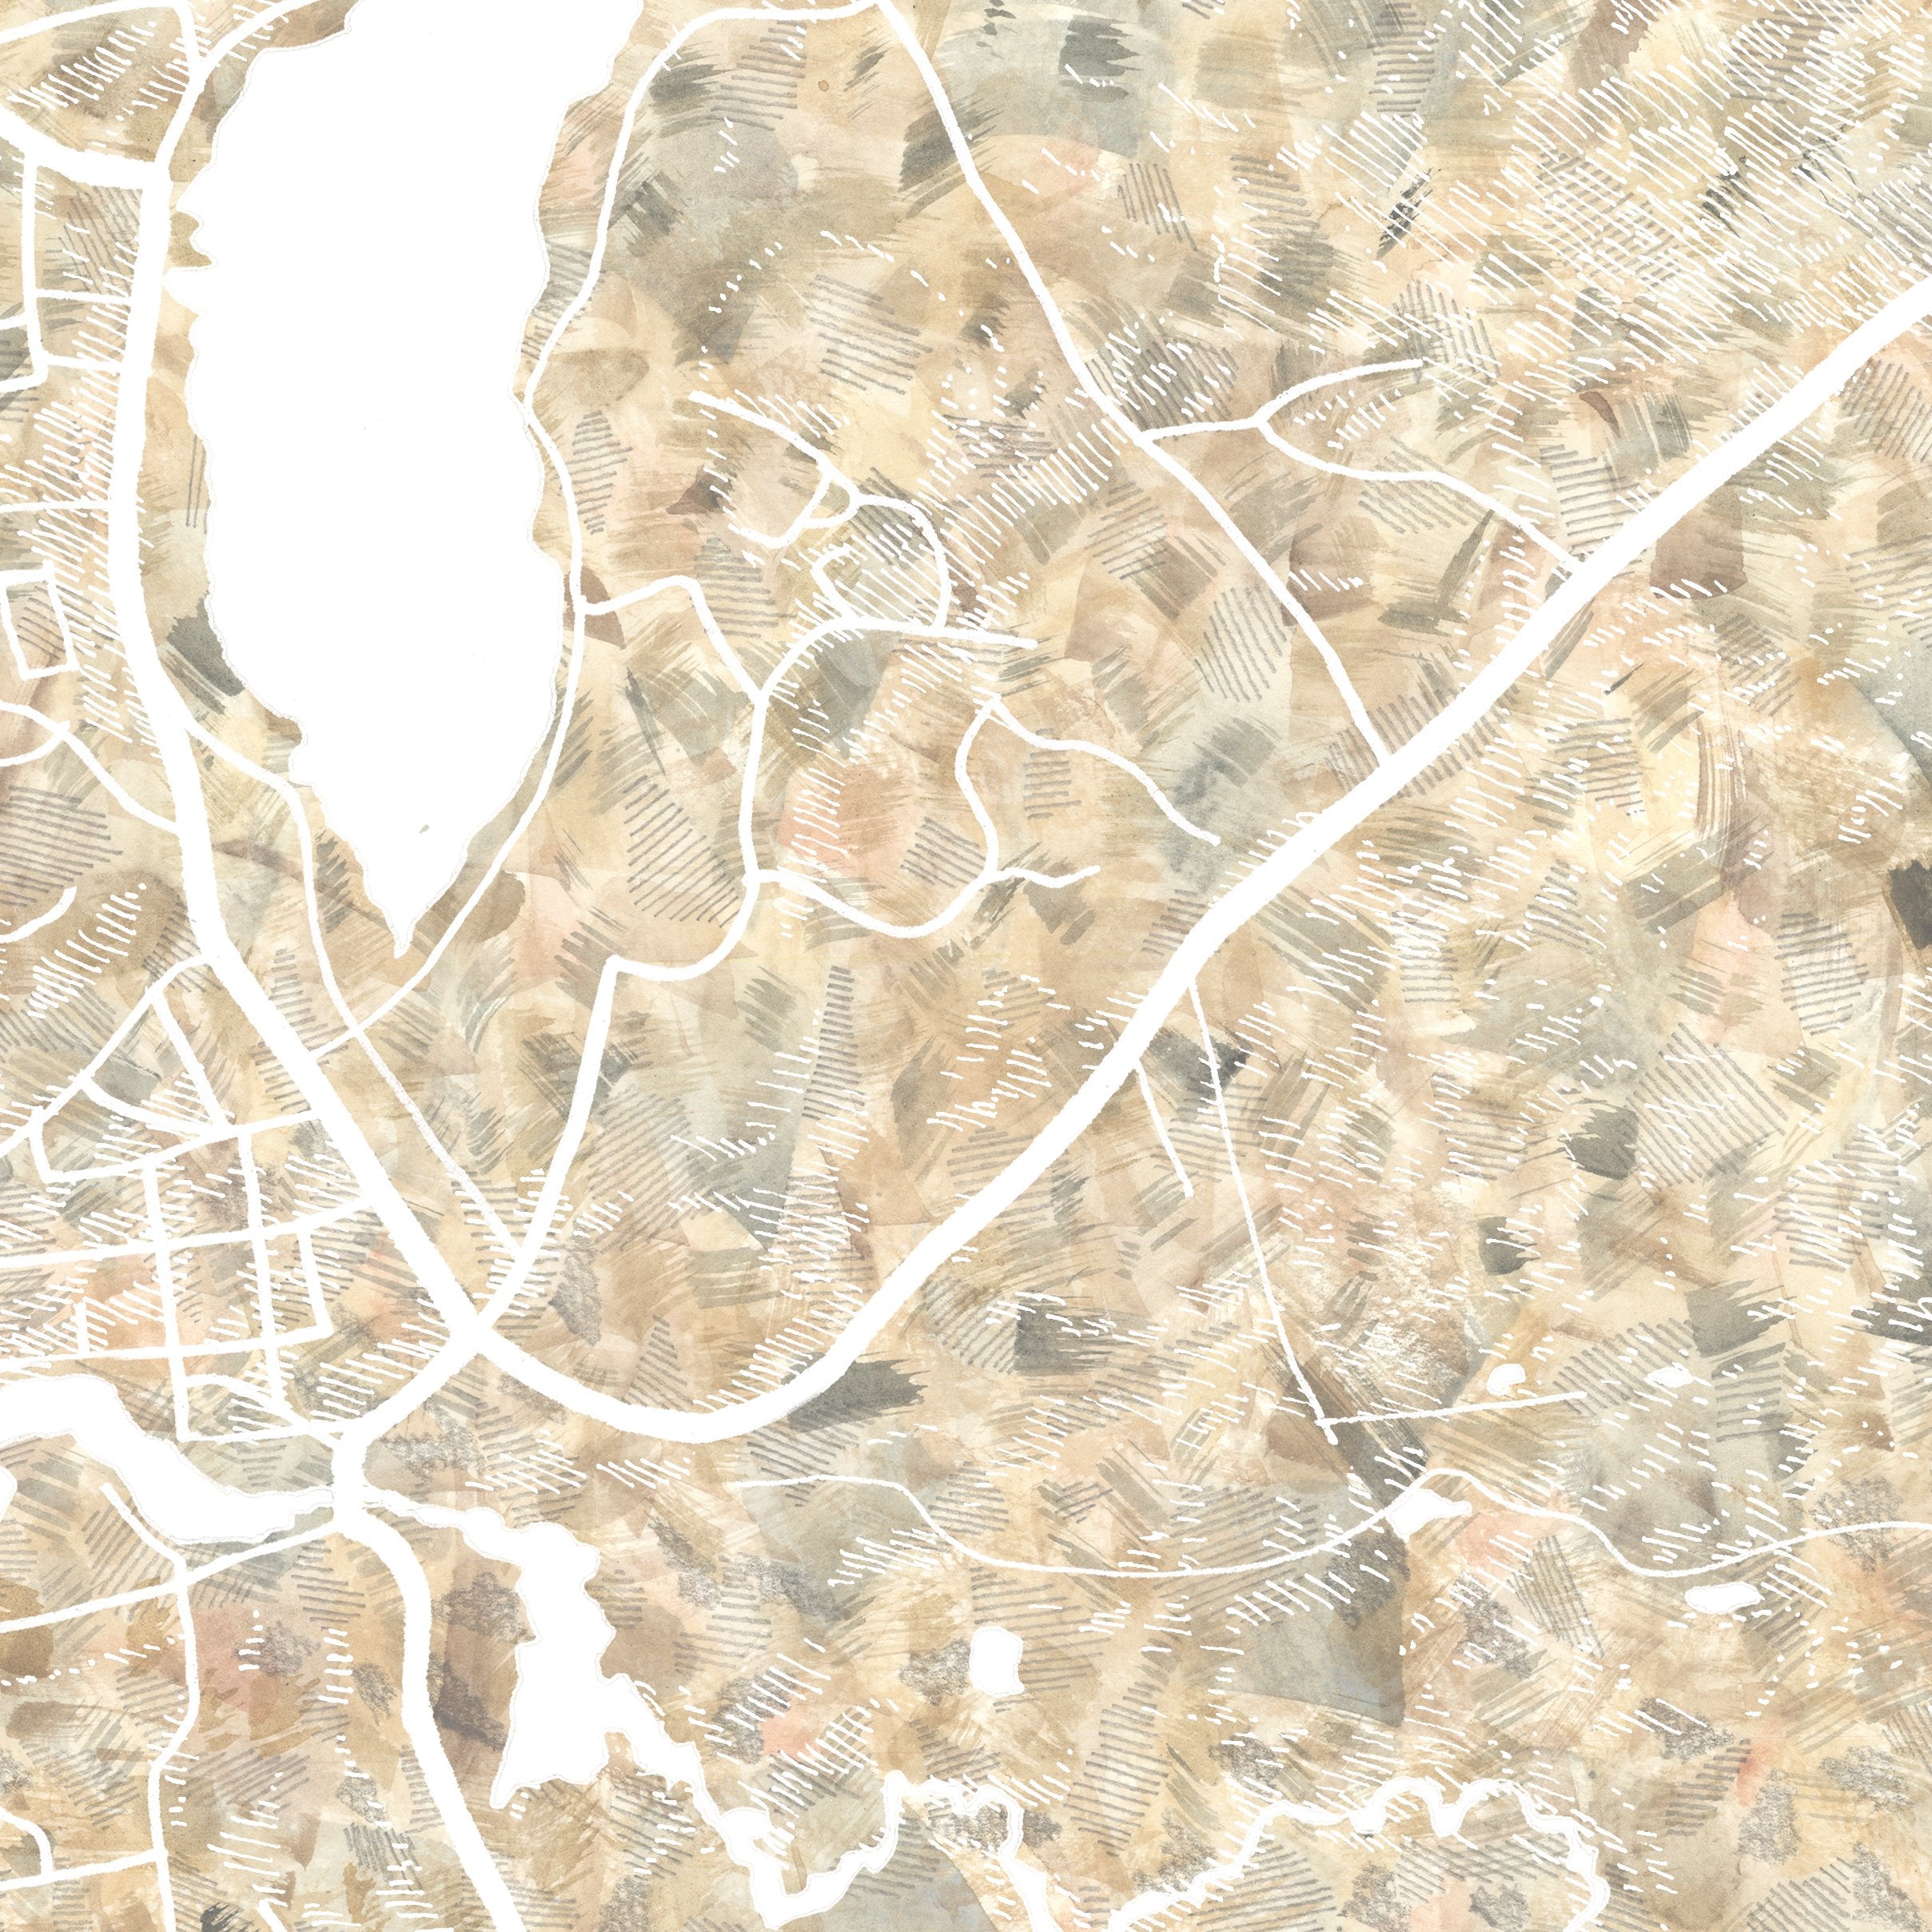 LAKE PLACID New York Urban Fabrics City Map: PRINT